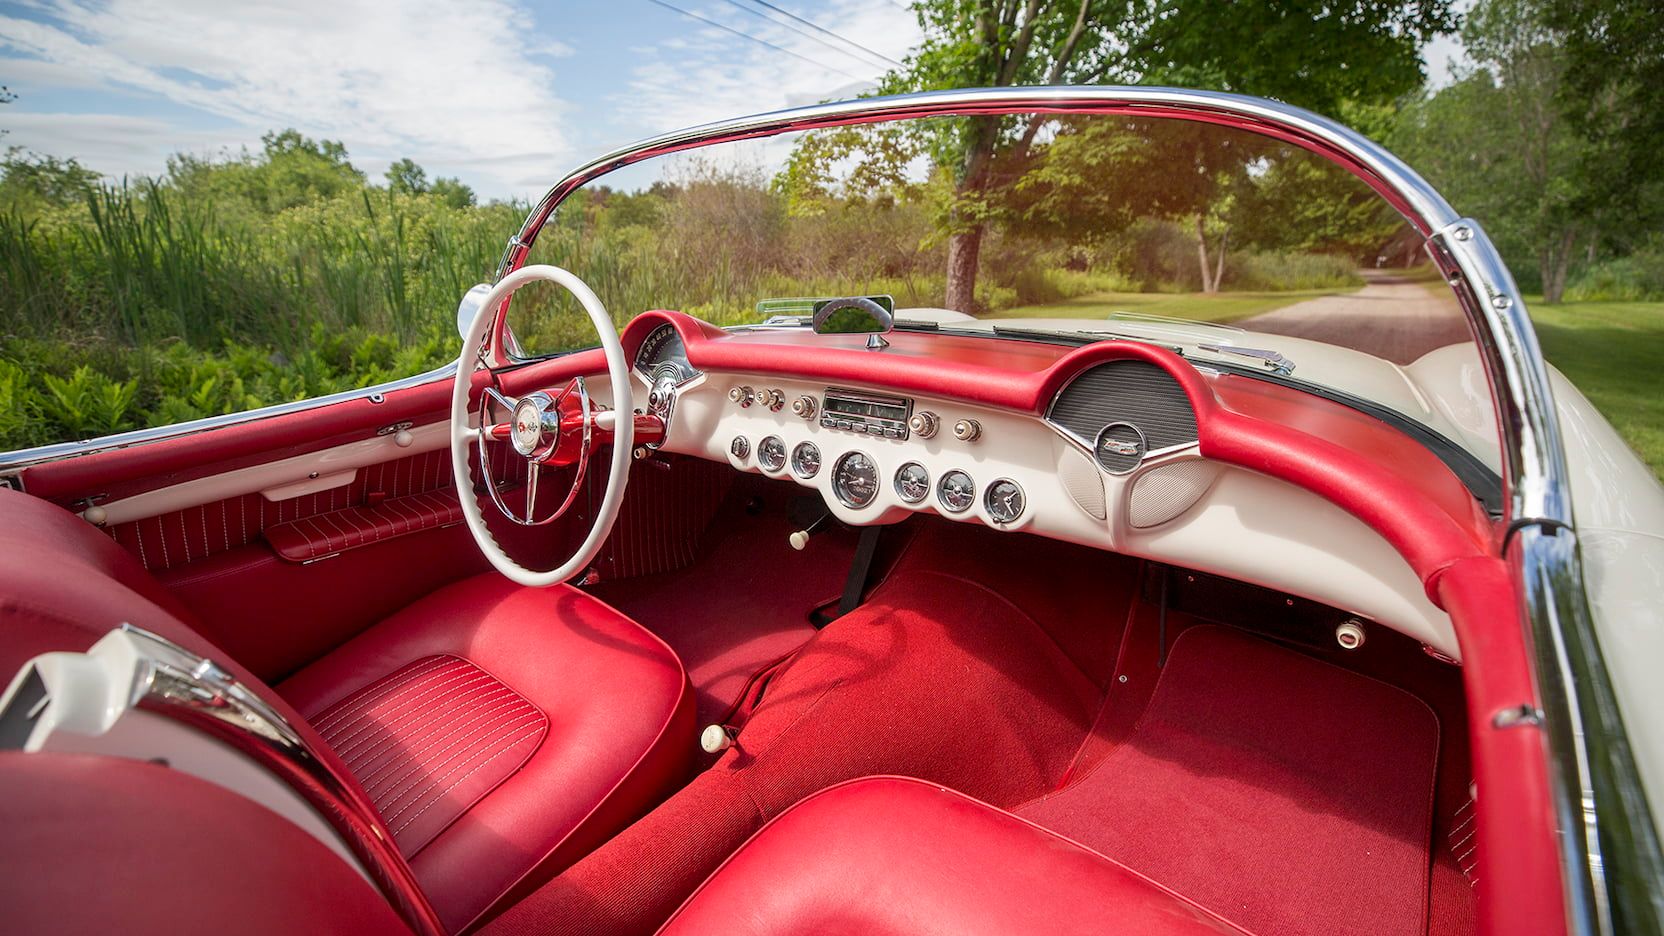 A parked 1953 Chevy Corvette